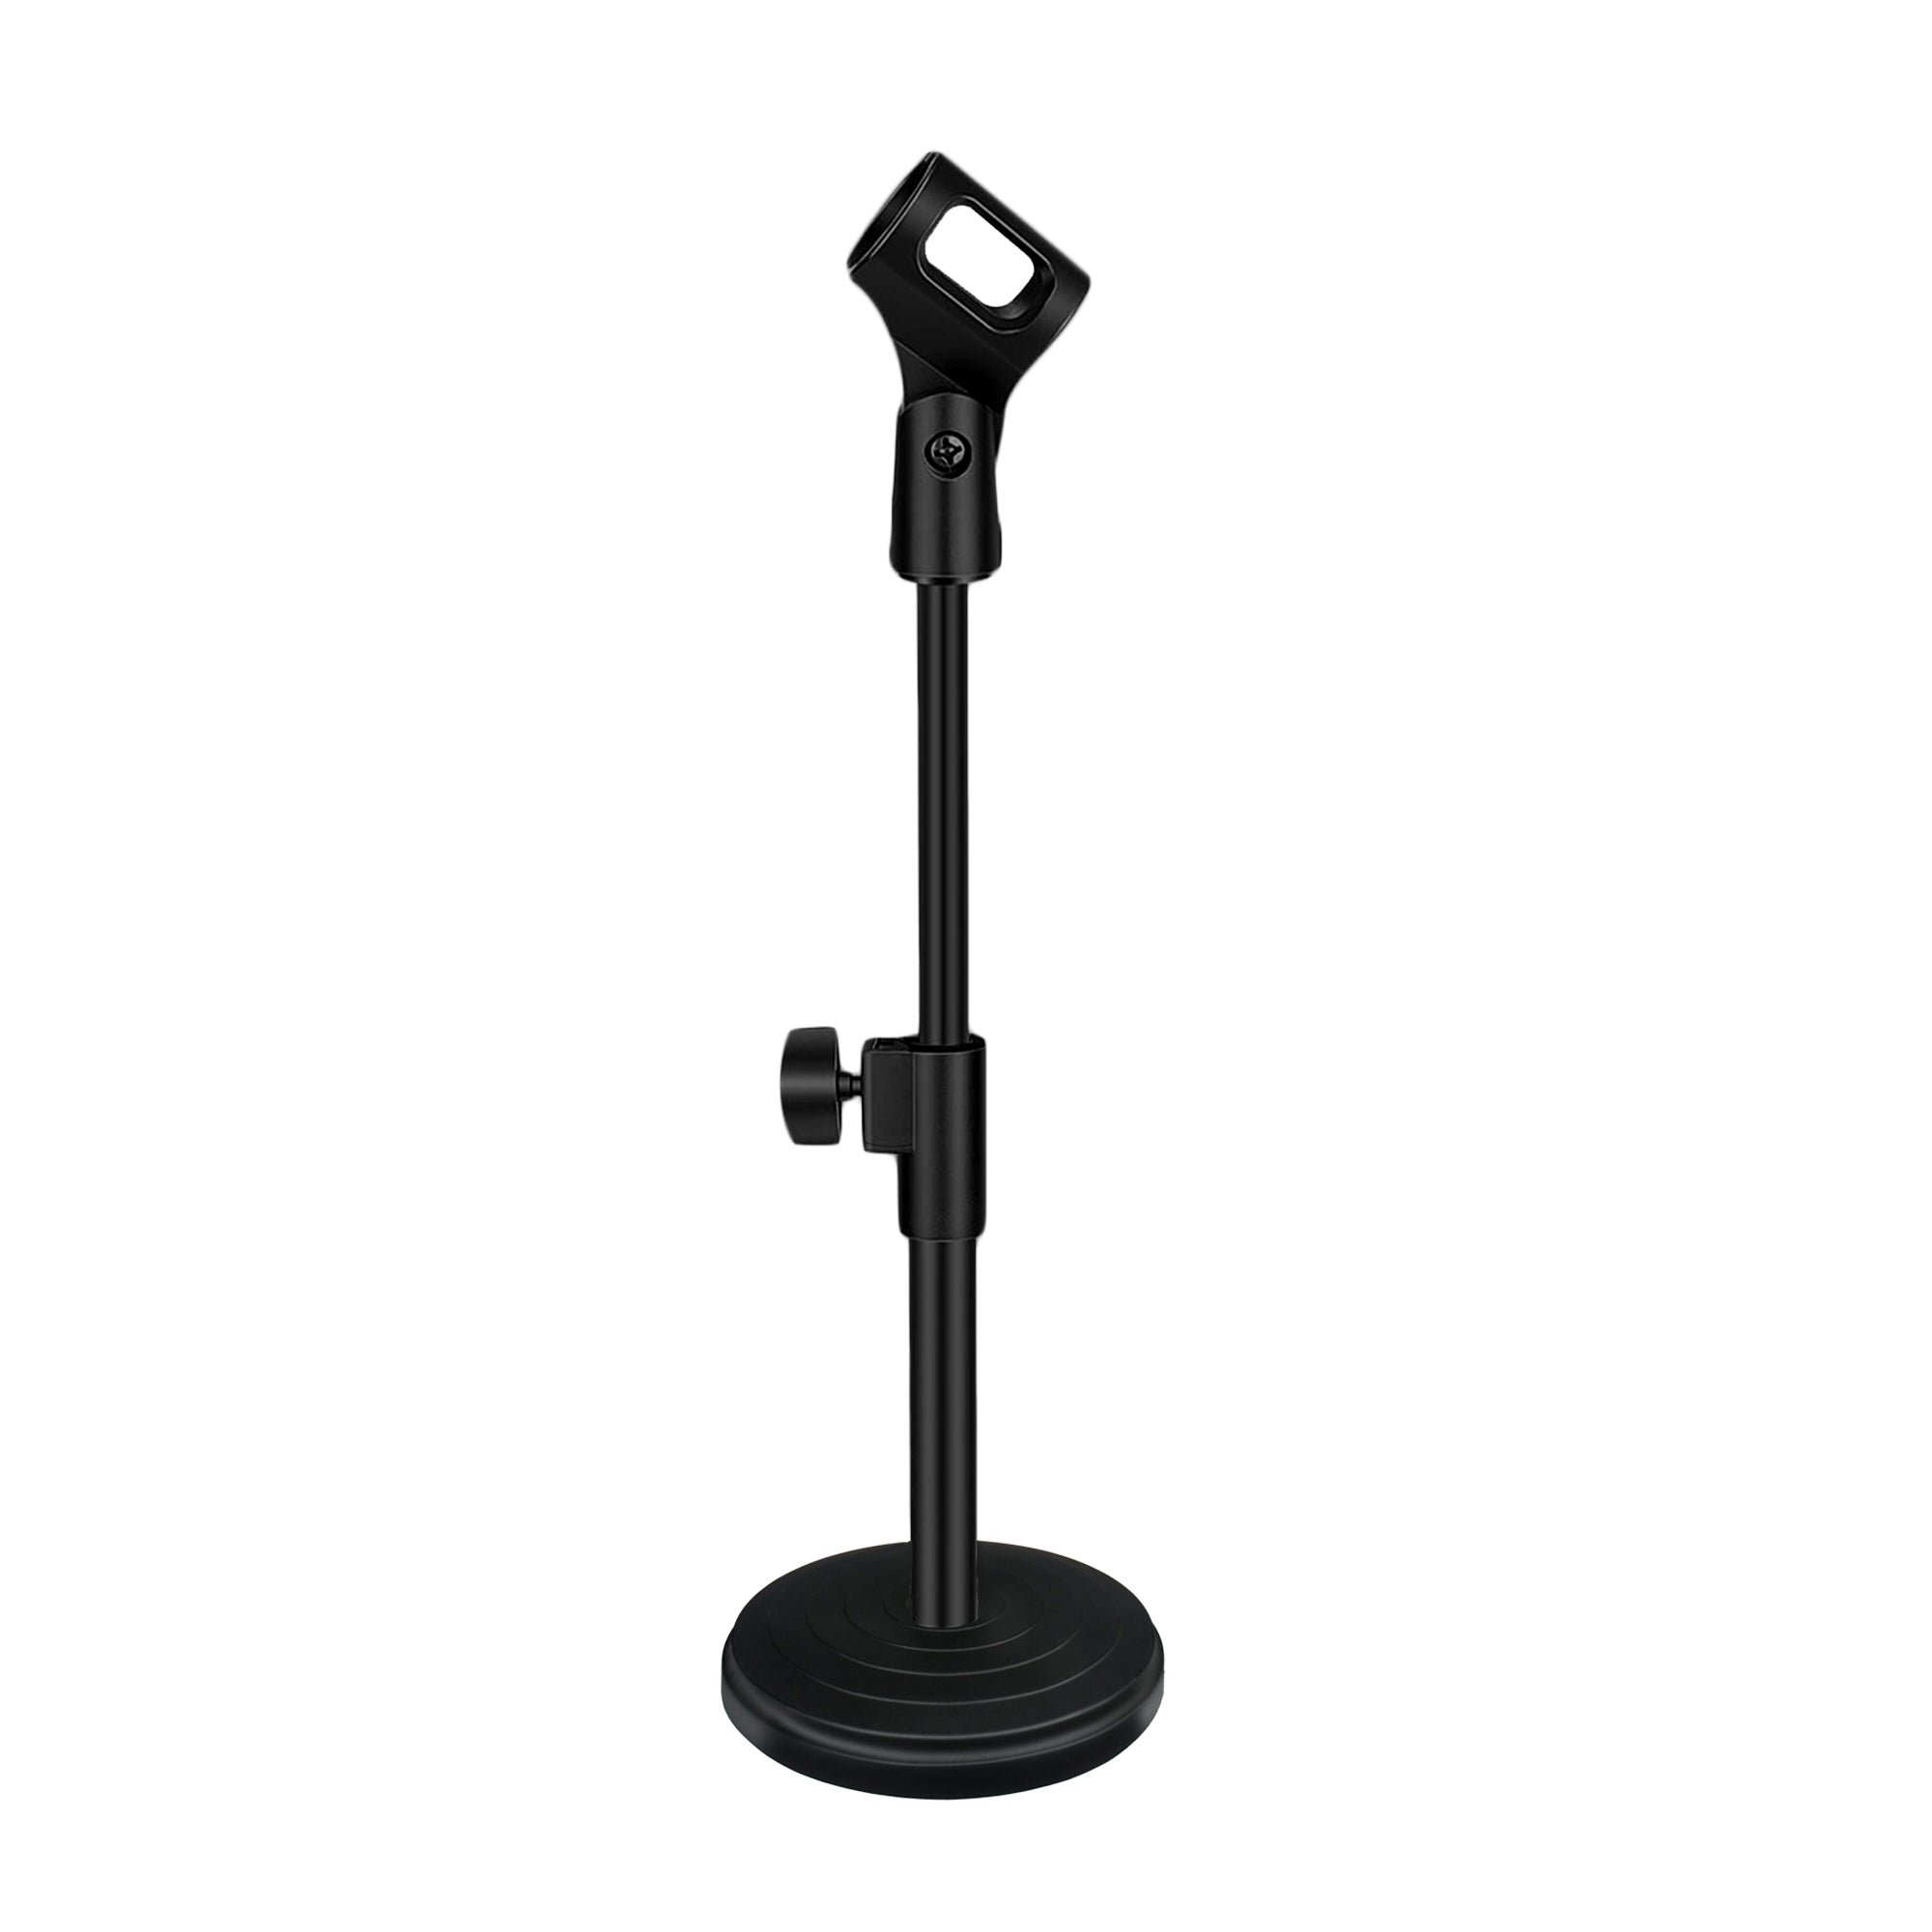 5 Core Desk Mic Stand Adjustable Table Round Base Portable Desktop Microphone Stands Holder